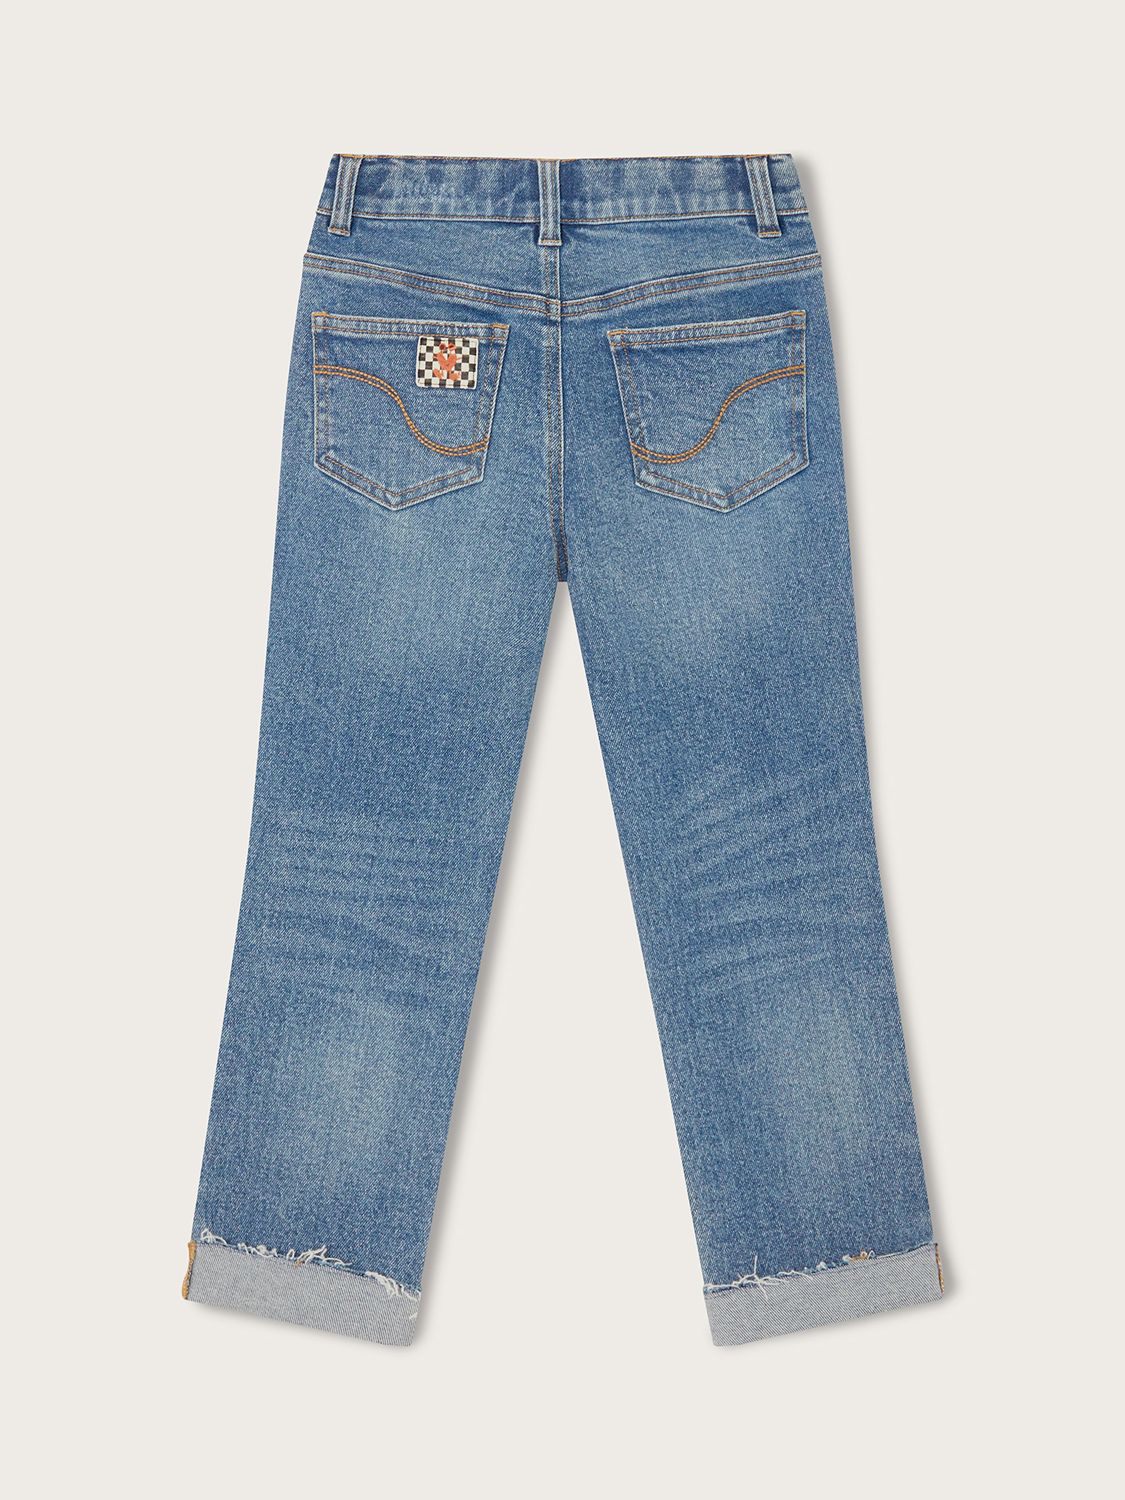 Monsoon Kids' Mid Wash Denim Jeans, Blue, 13 years